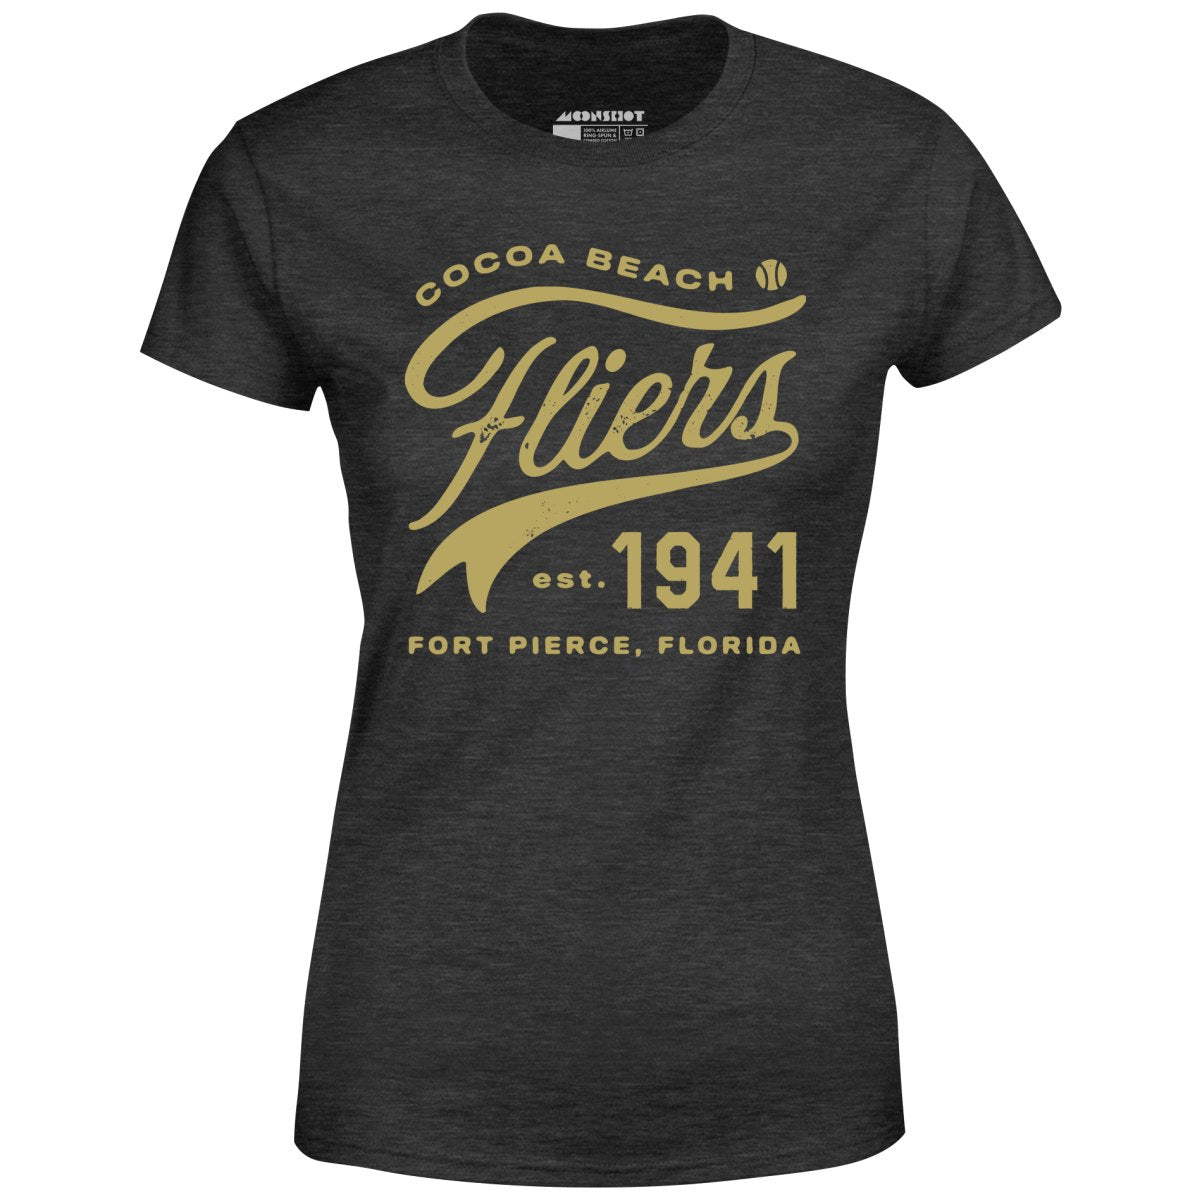 Cocoa Beach Fliers - Florida - Vintage Defunct Baseball Teams - Women's T-Shirt